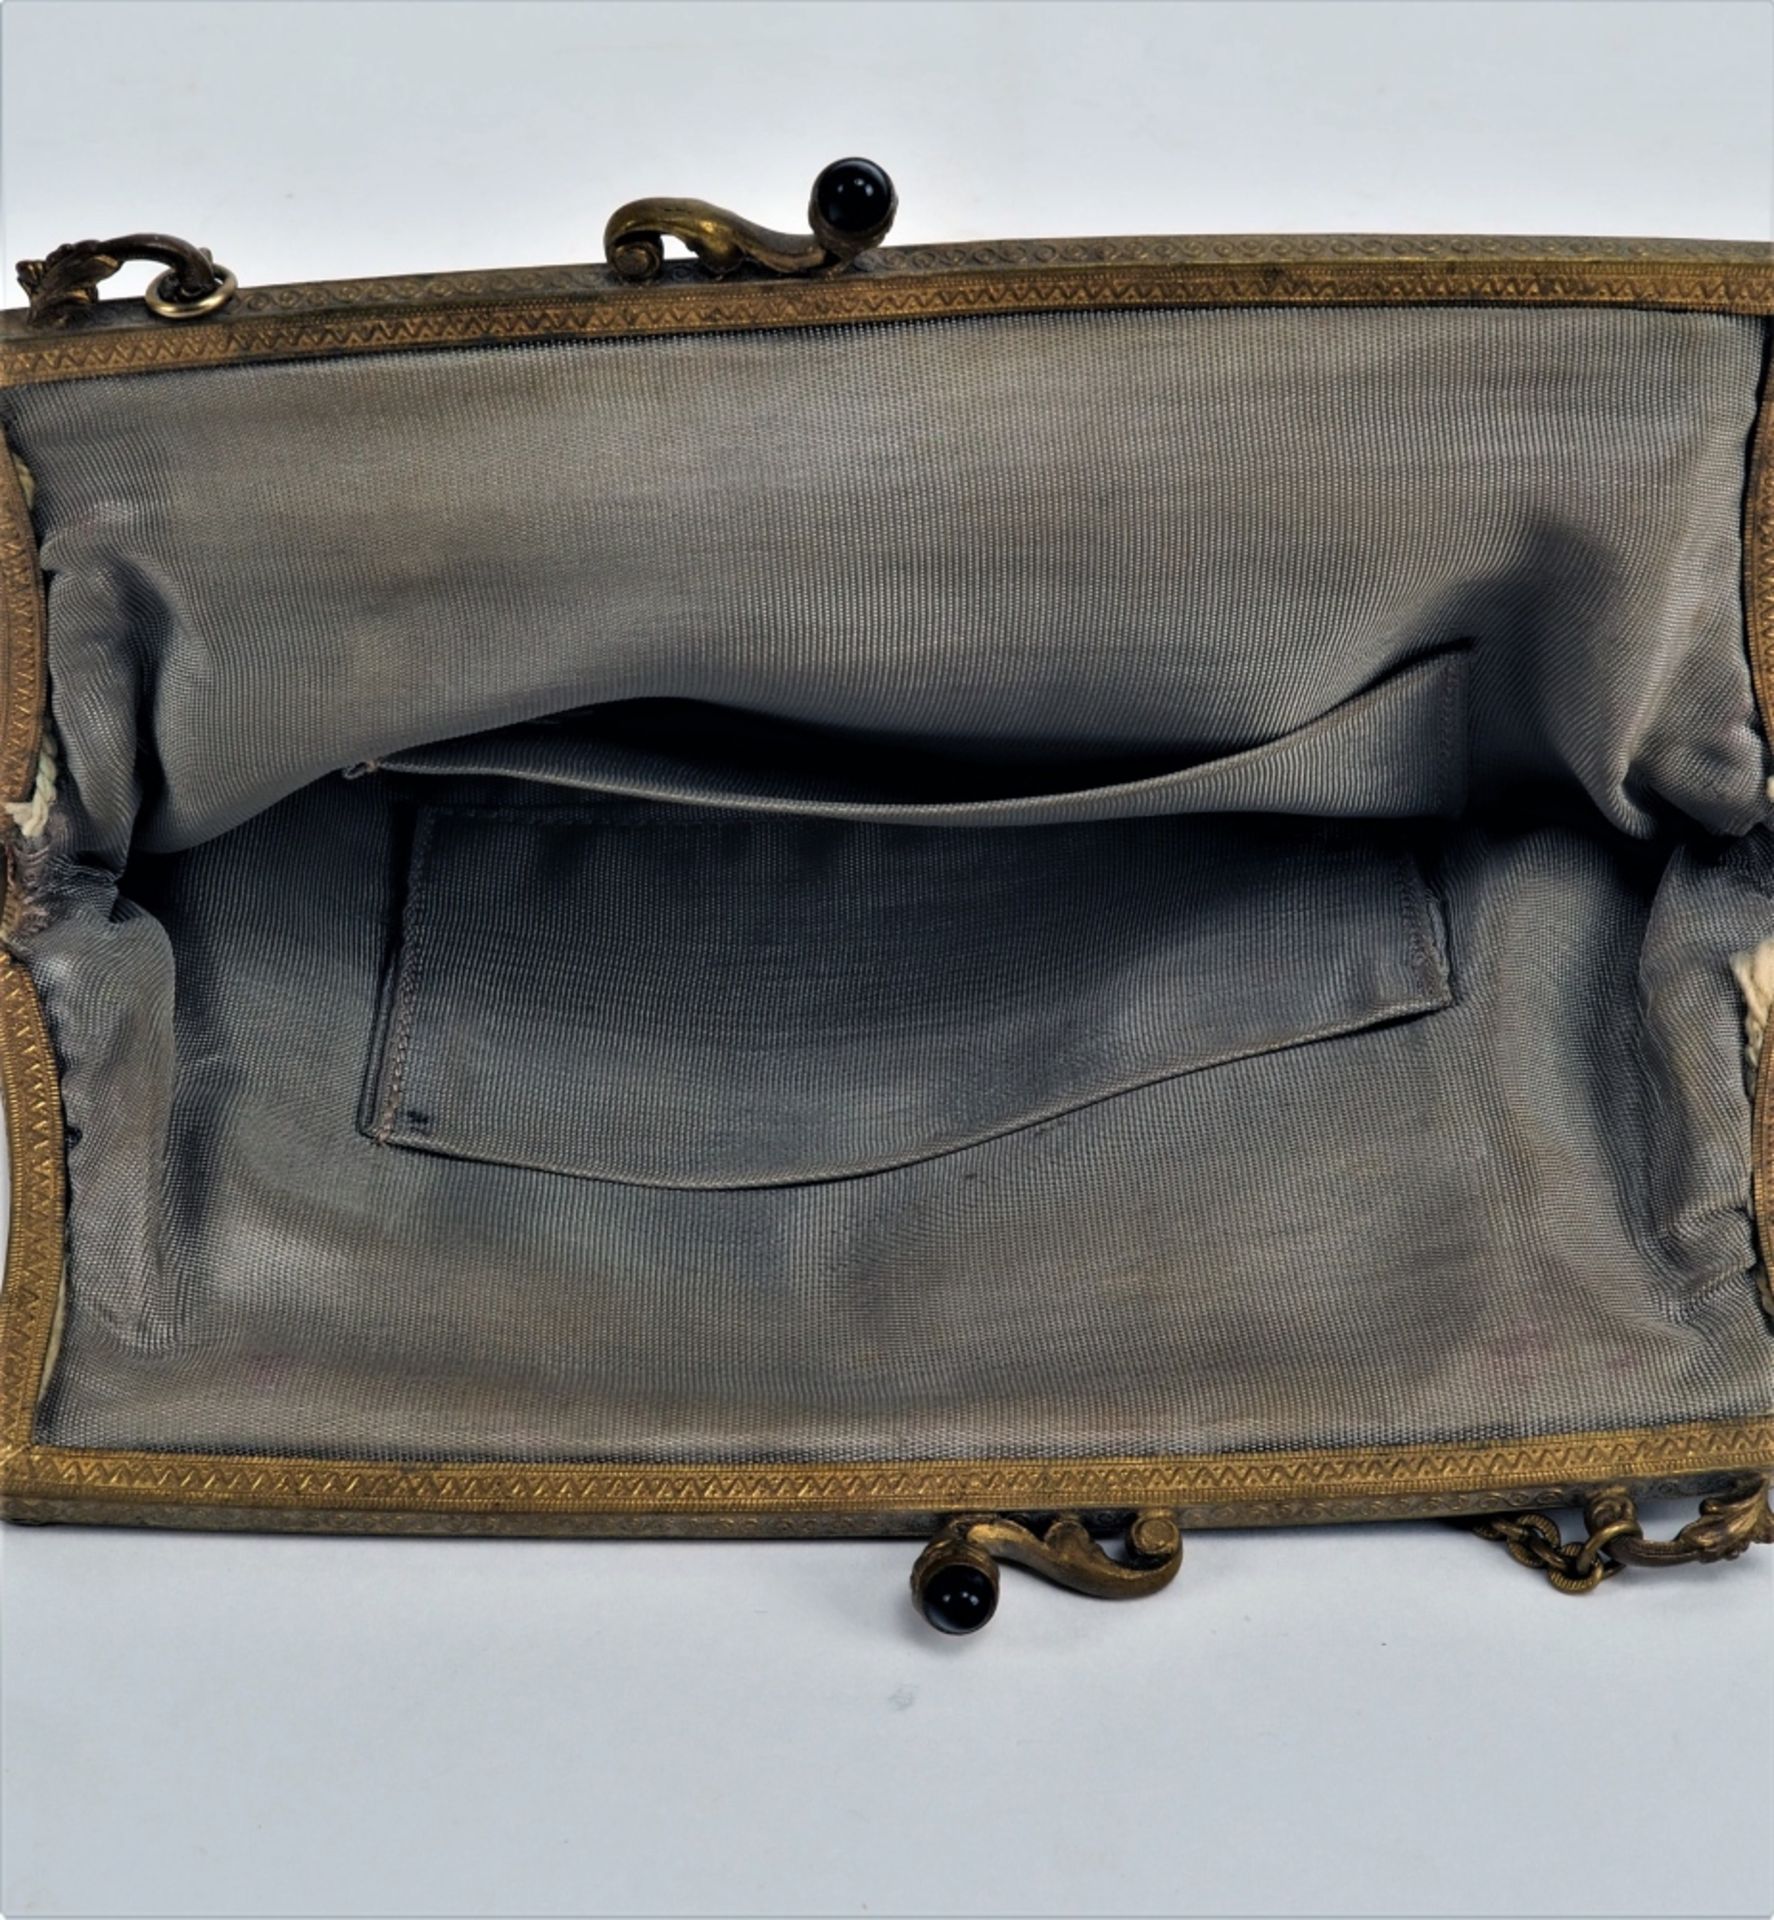 Ladies handbag around 1900 - Image 3 of 3